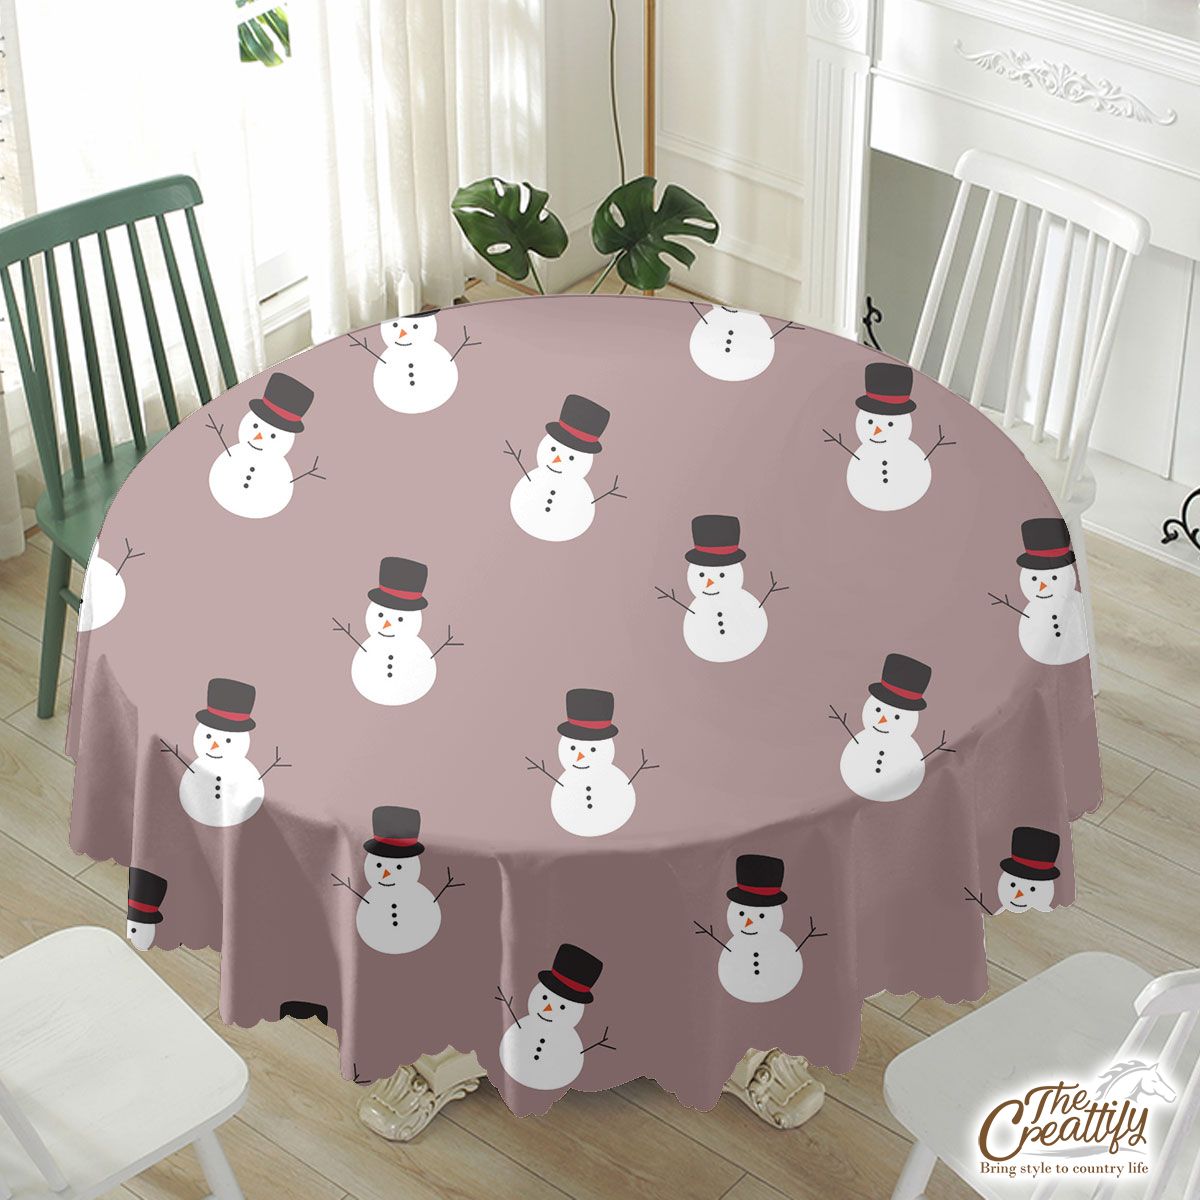 Snowman, Christmas Snowman, Snowman Hat on Light Color Waterproof Tablecloth